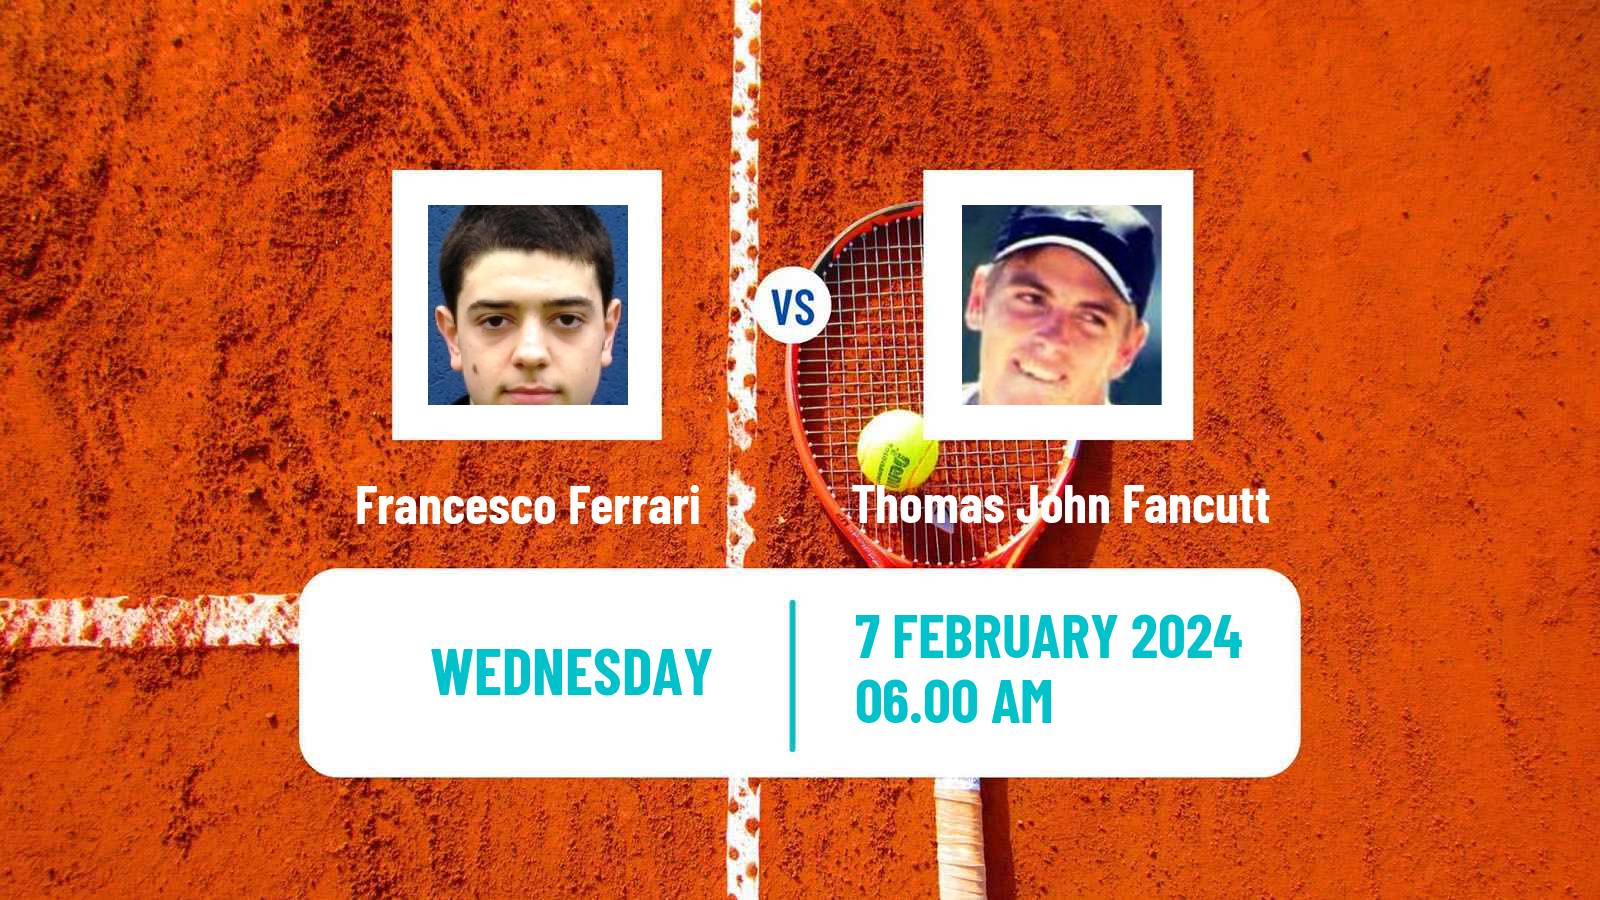 Tennis ITF M25 Hammamet 2 Men Francesco Ferrari - Thomas John Fancutt